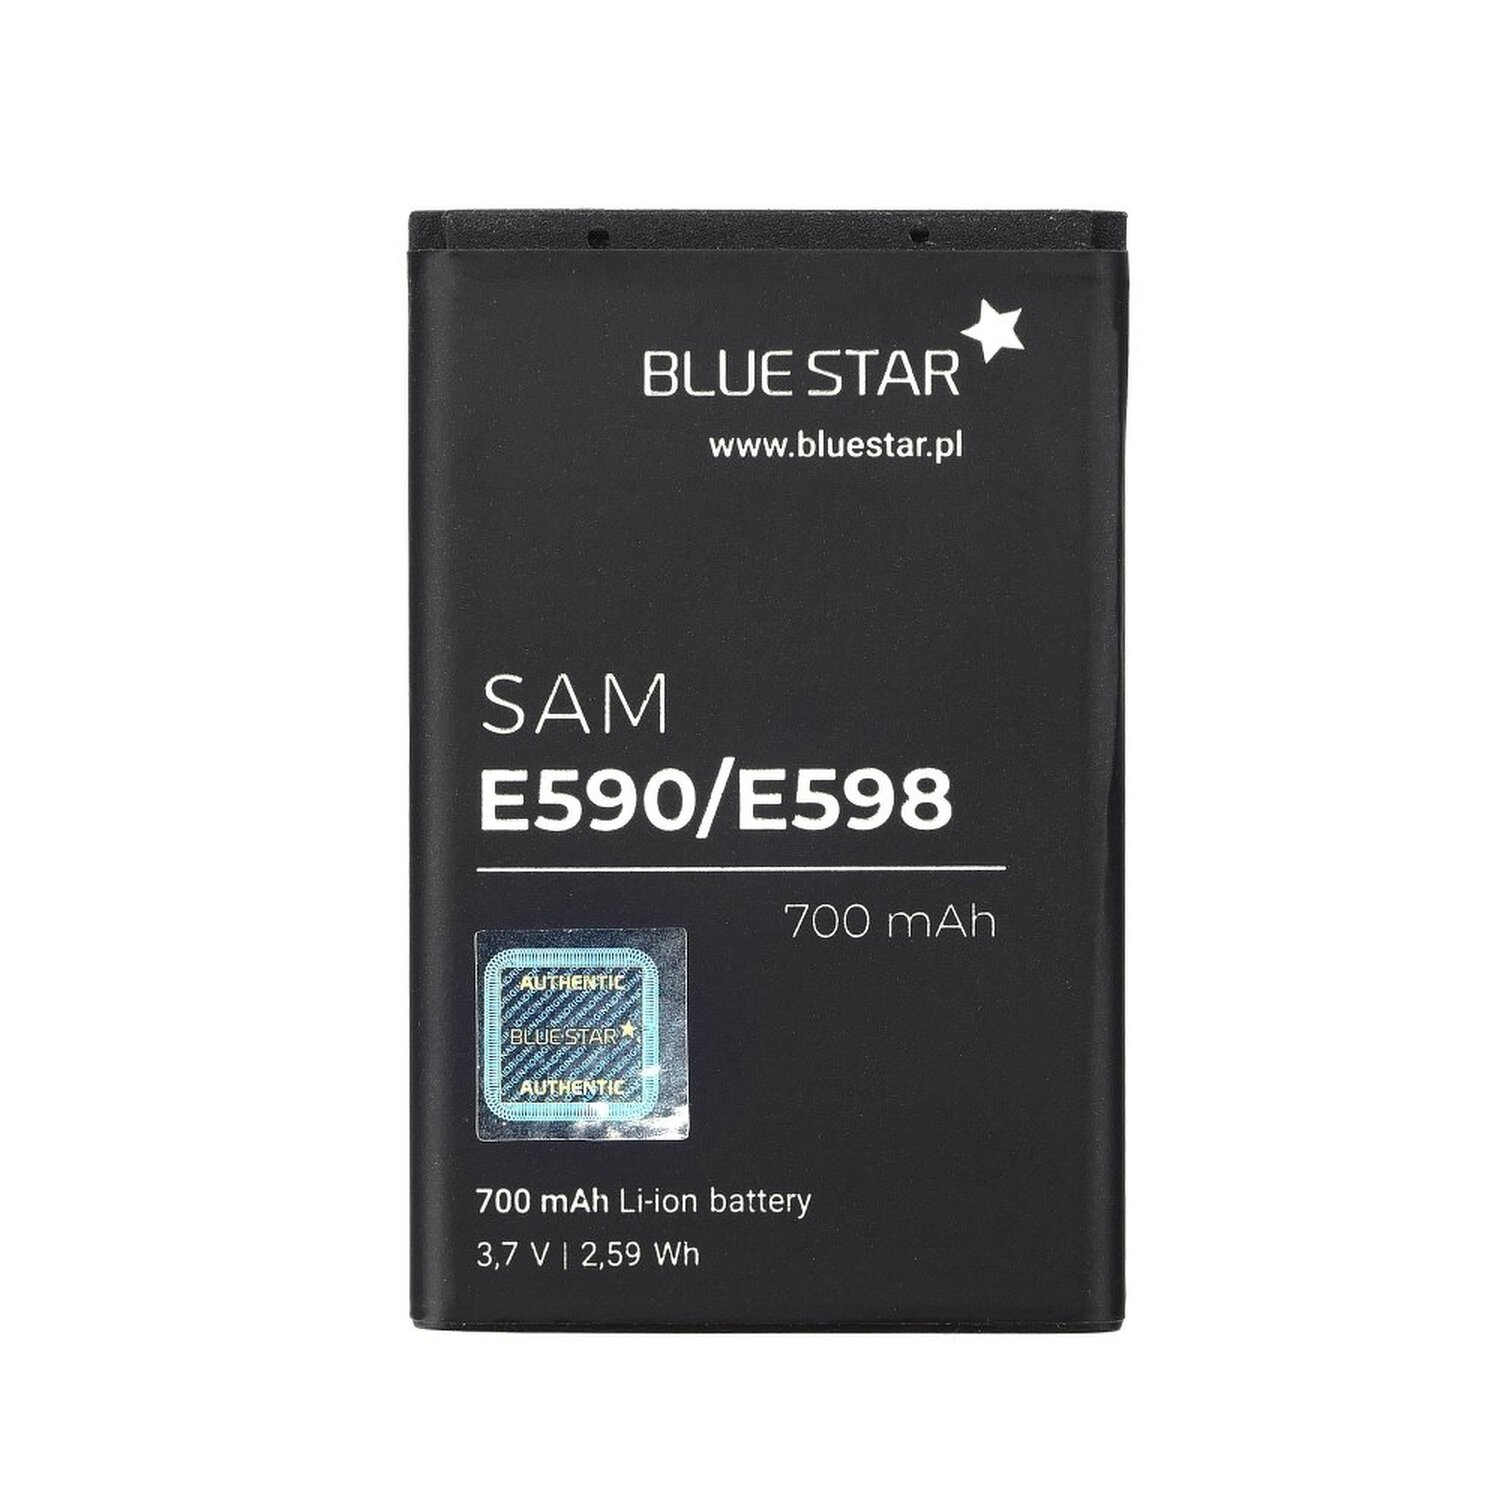 BLUESTAR Akku für Samsung E590 Handyakku E790i / Li-Ion E598 